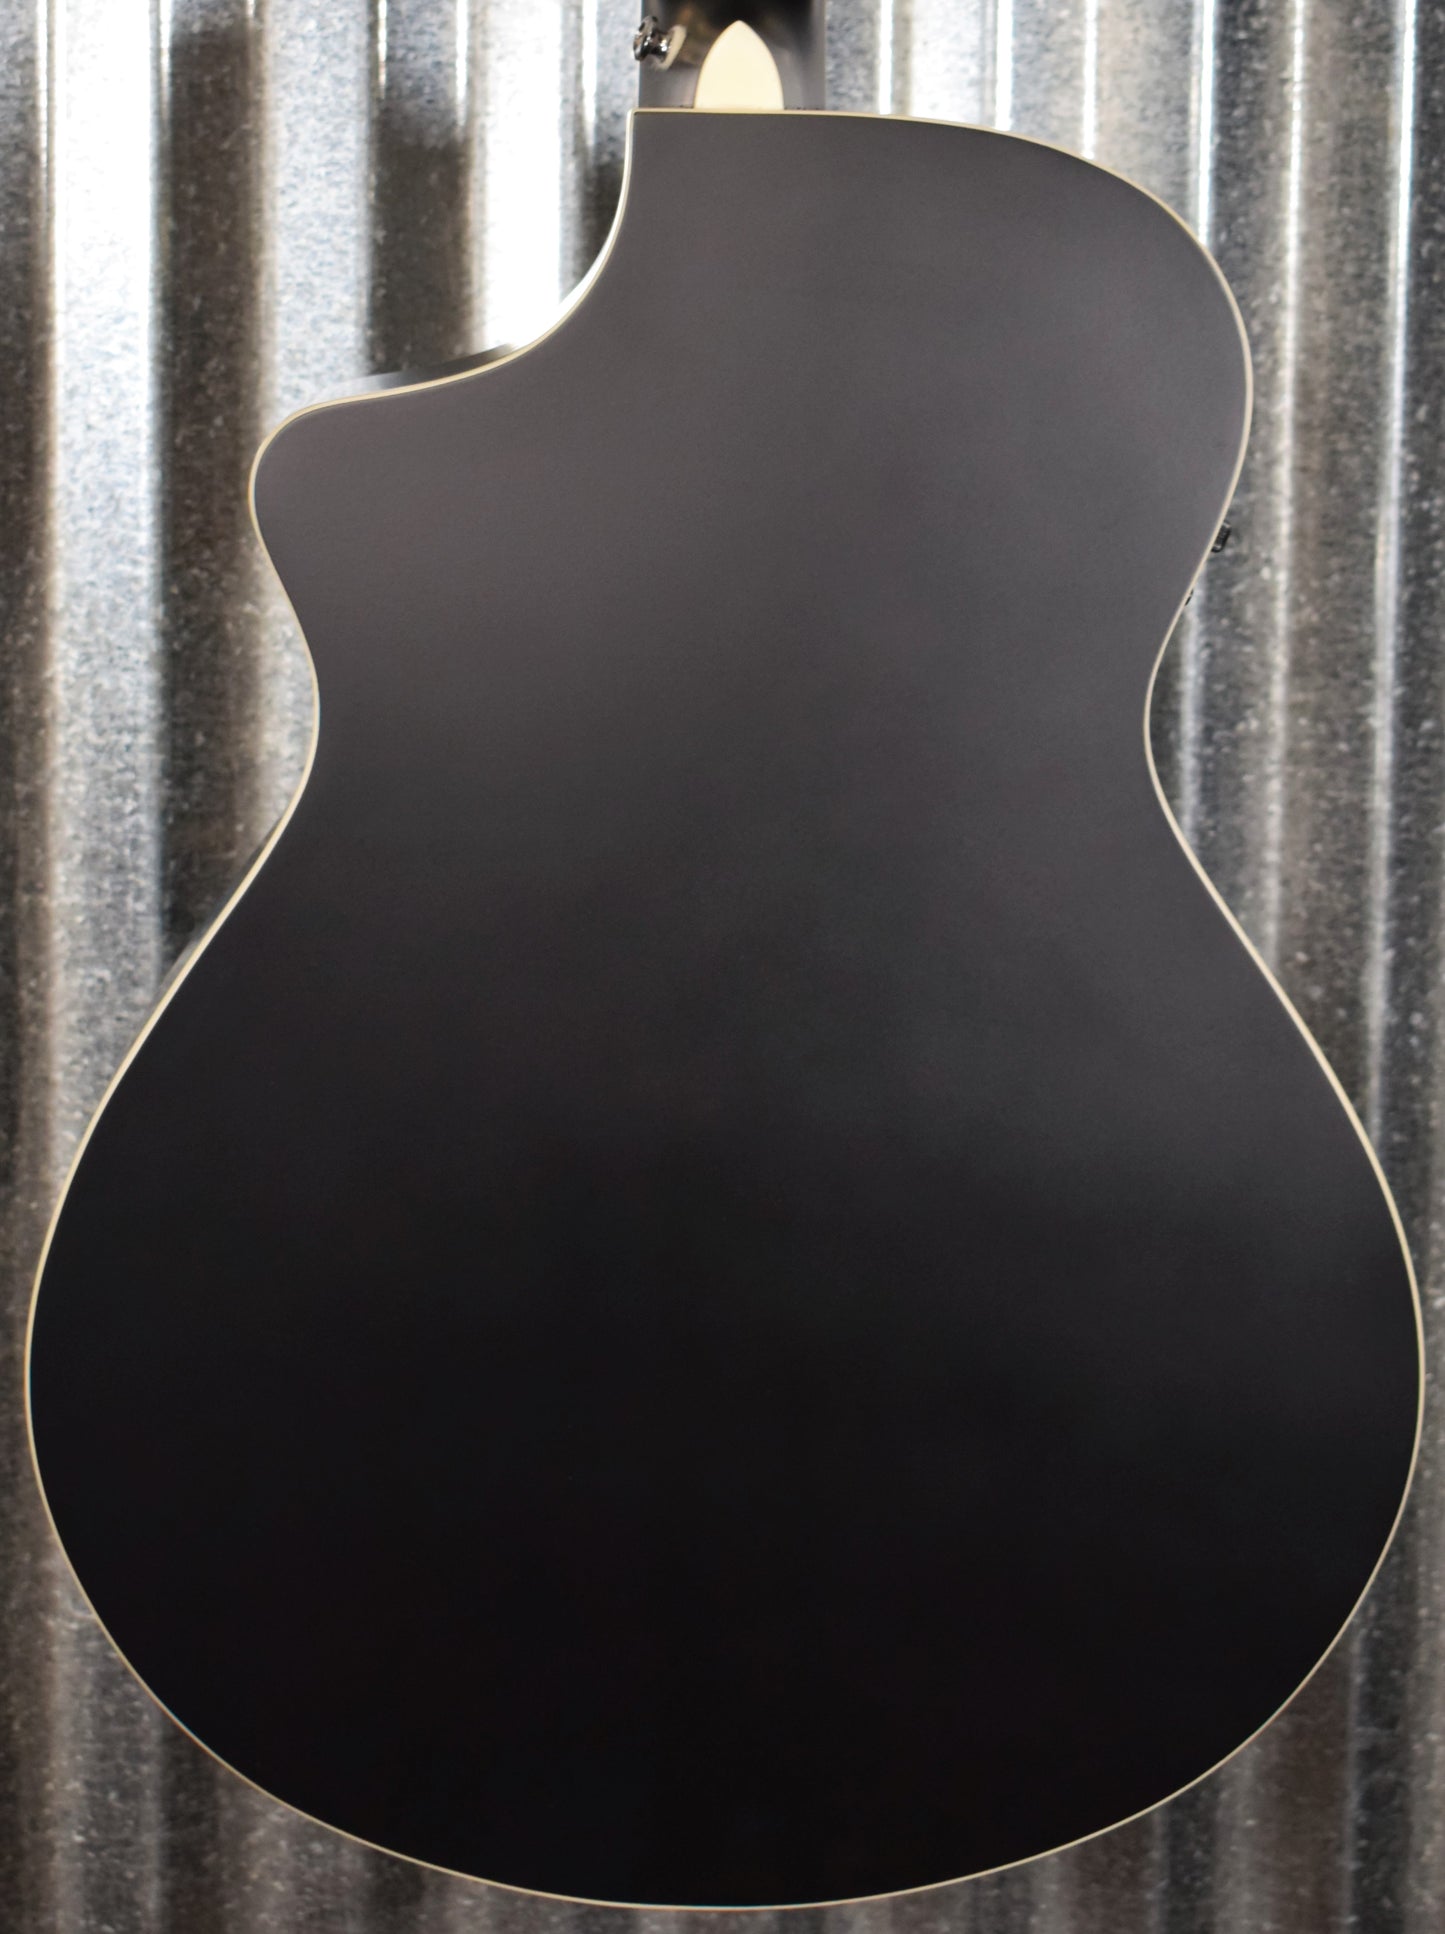 Breedlove Discovery Concert CE Satin Black Acoustic Electric Guitar Blem #6173